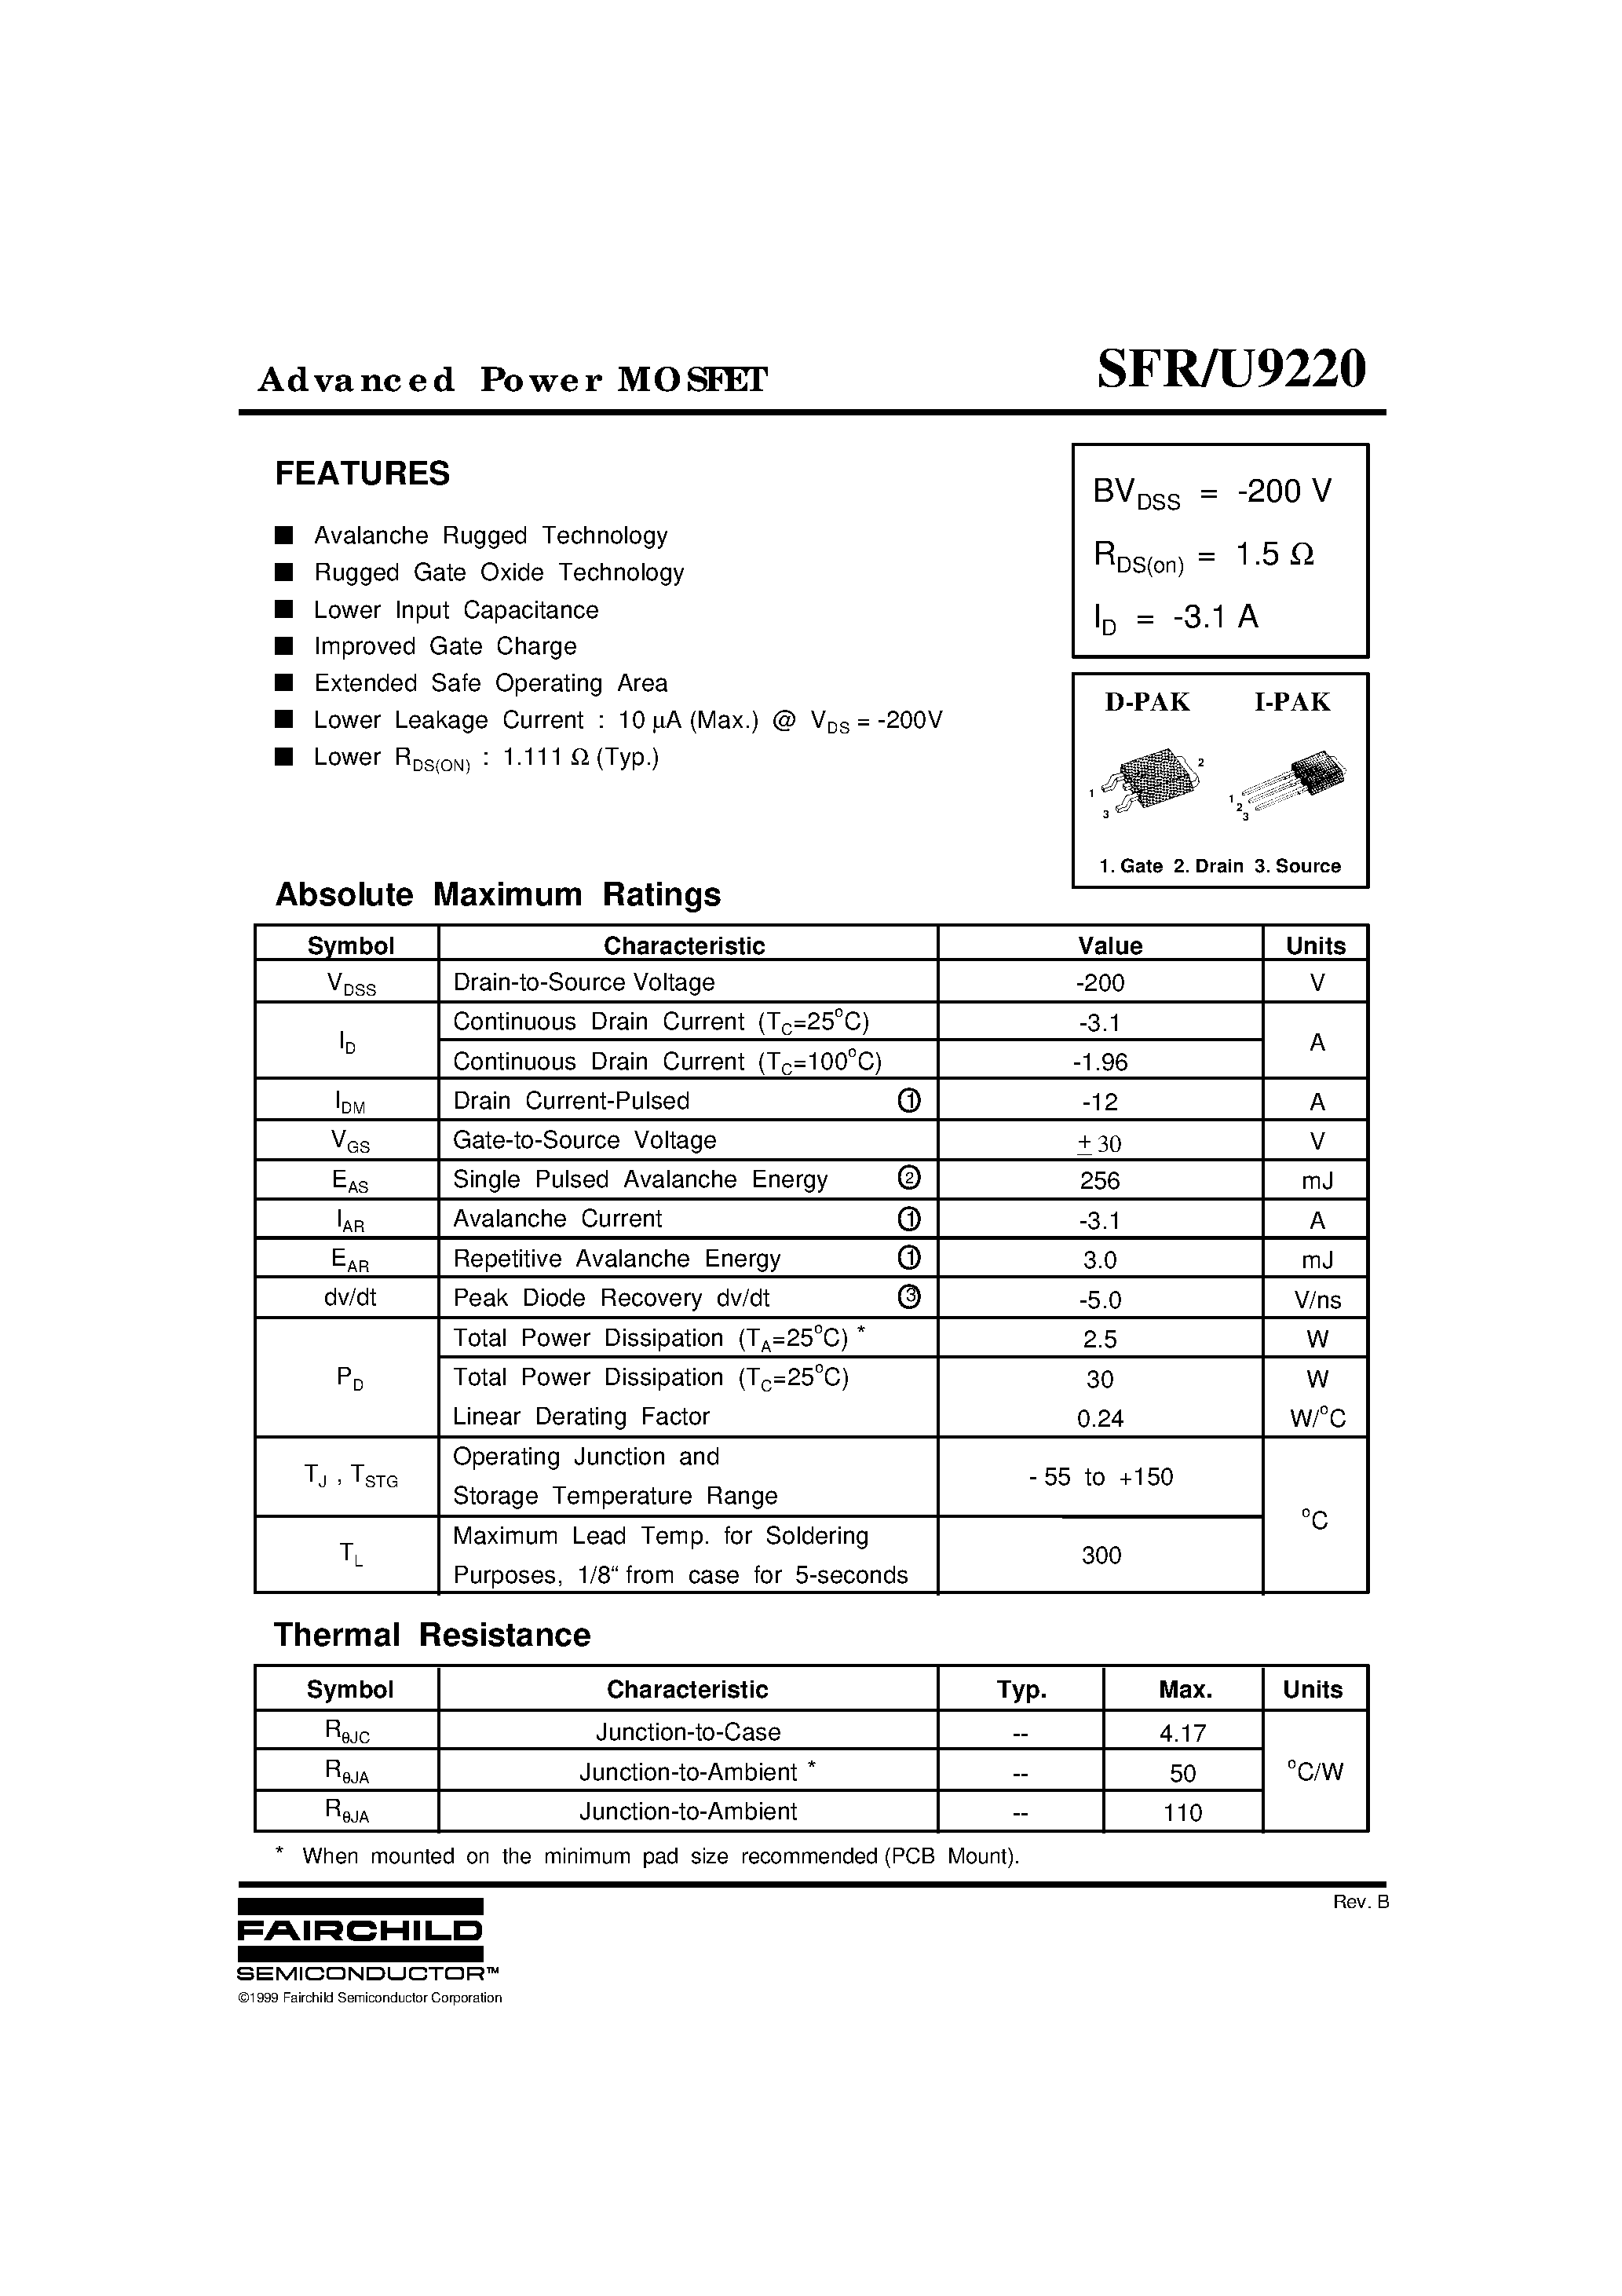 Даташит SFR9220 - Advanced Power MOSFET страница 1